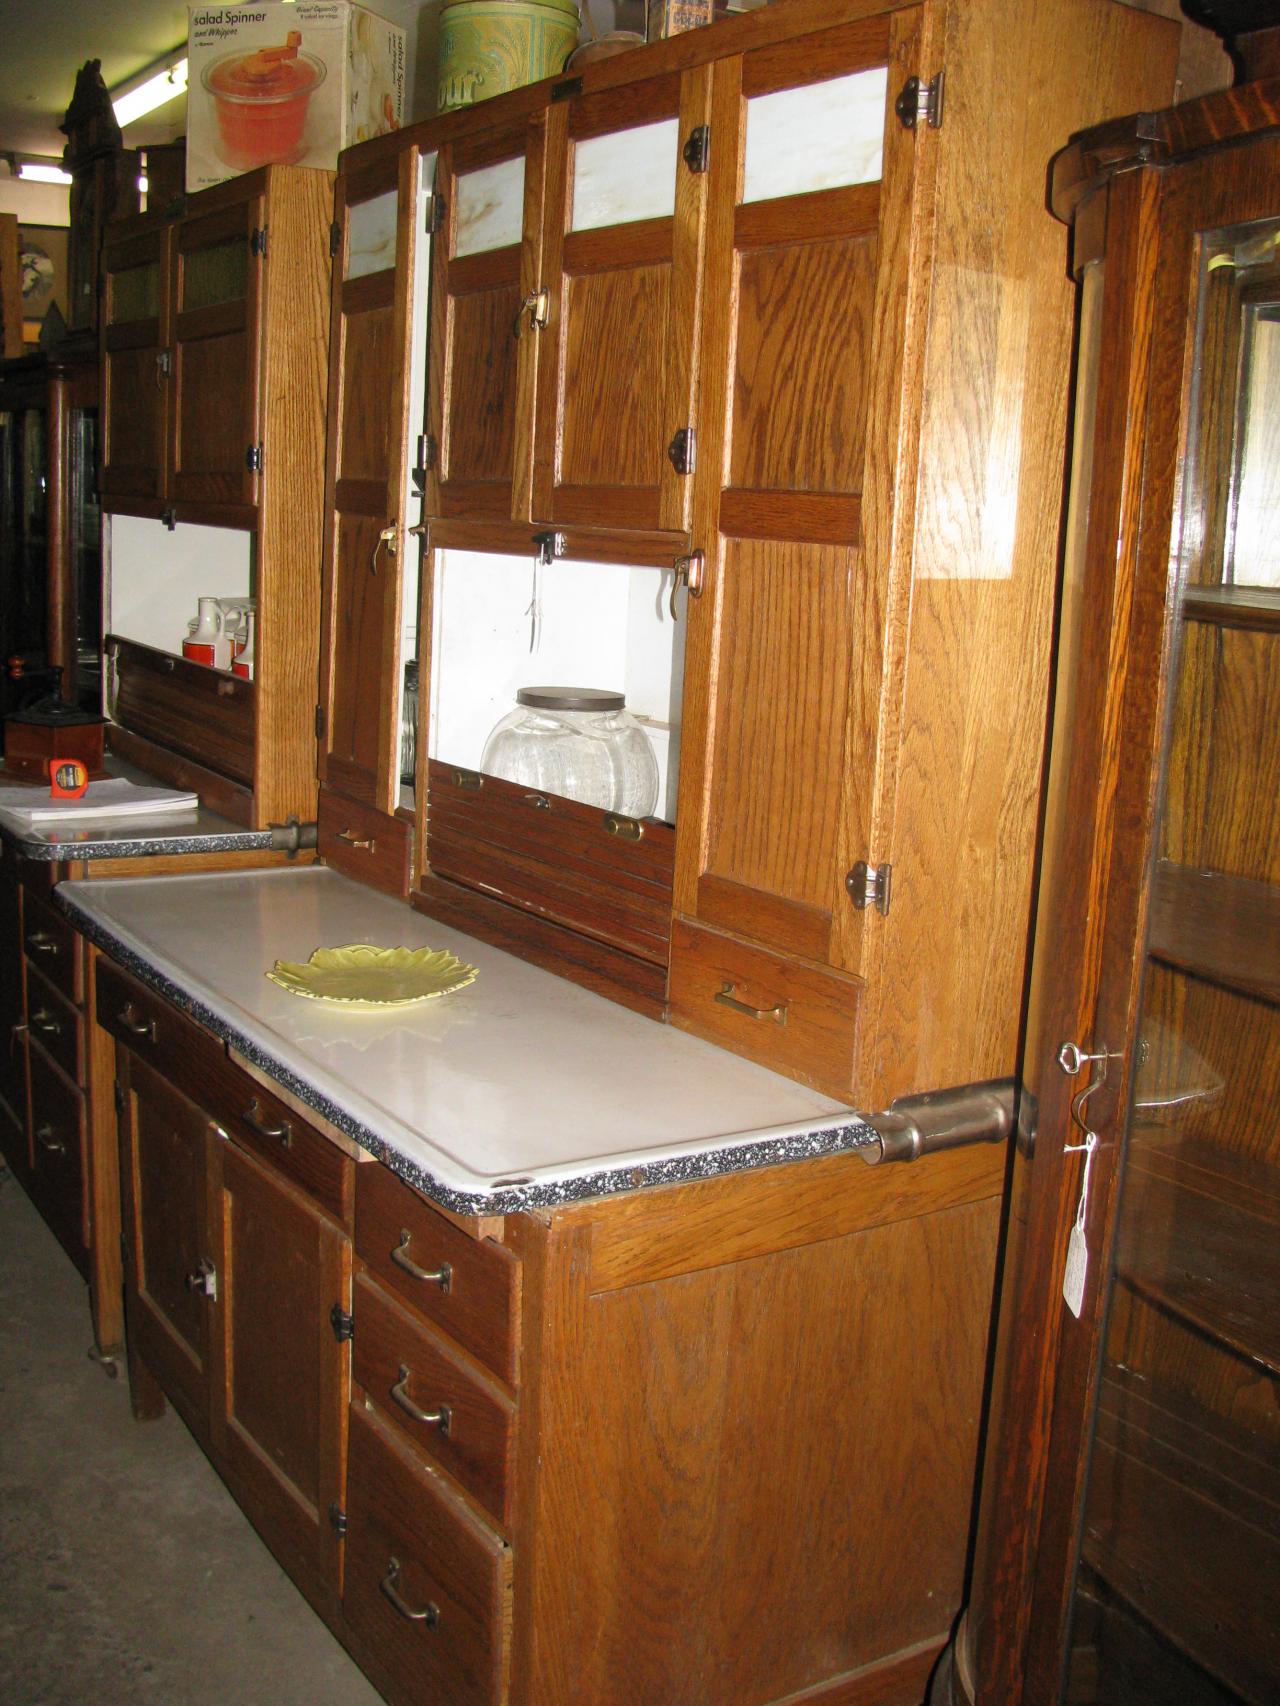 Z S Antiques Restorations Hoosier Baker S Cabinets Including